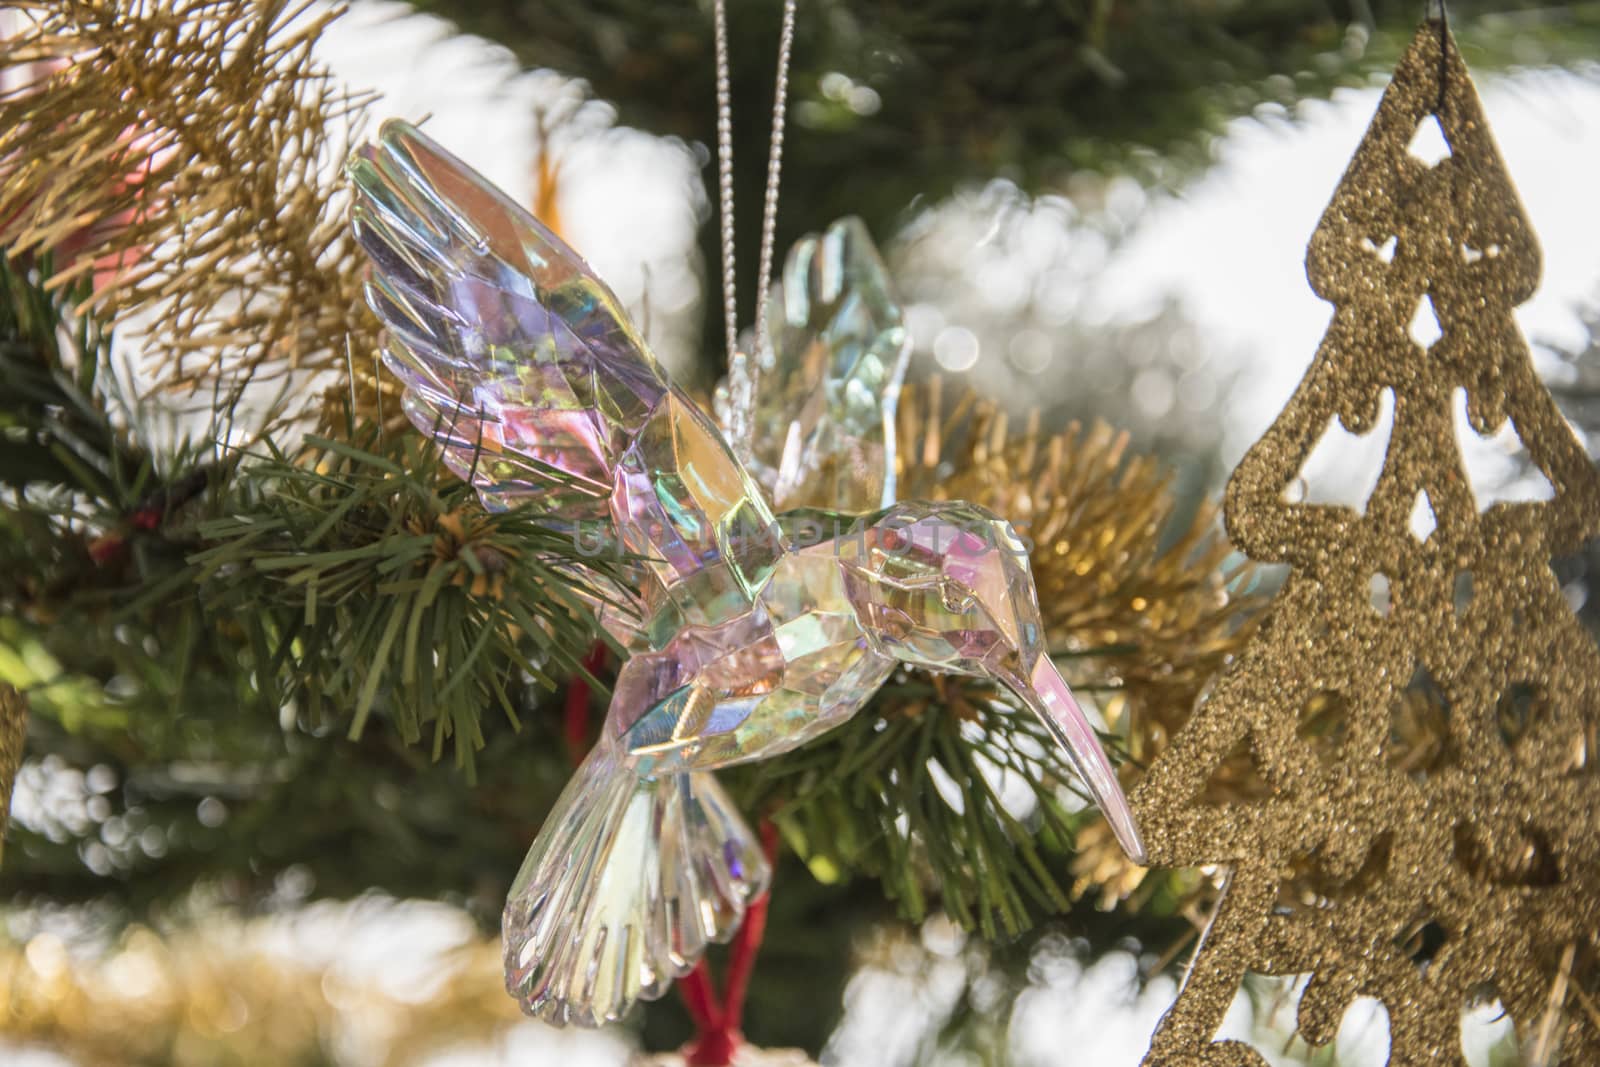  Glass humming bird ornament on christmas tree. Beautiful holiday photo. 
